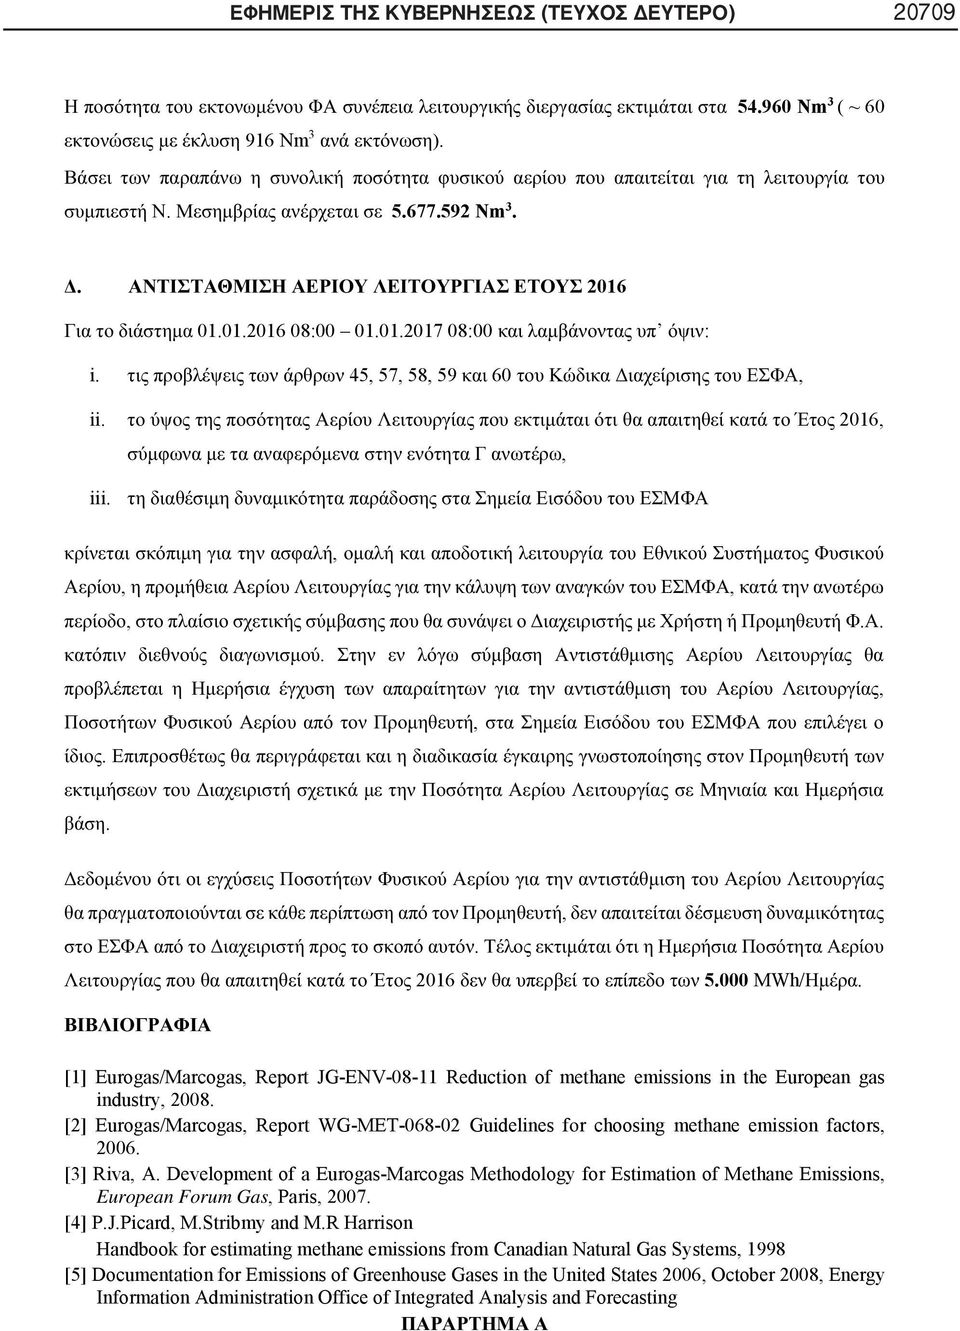 [2] Eurogas/Marcogas, Report WG-MET-068-02 Guidelines f r choosing methane emission factors, 2006. [3] Riva, A.